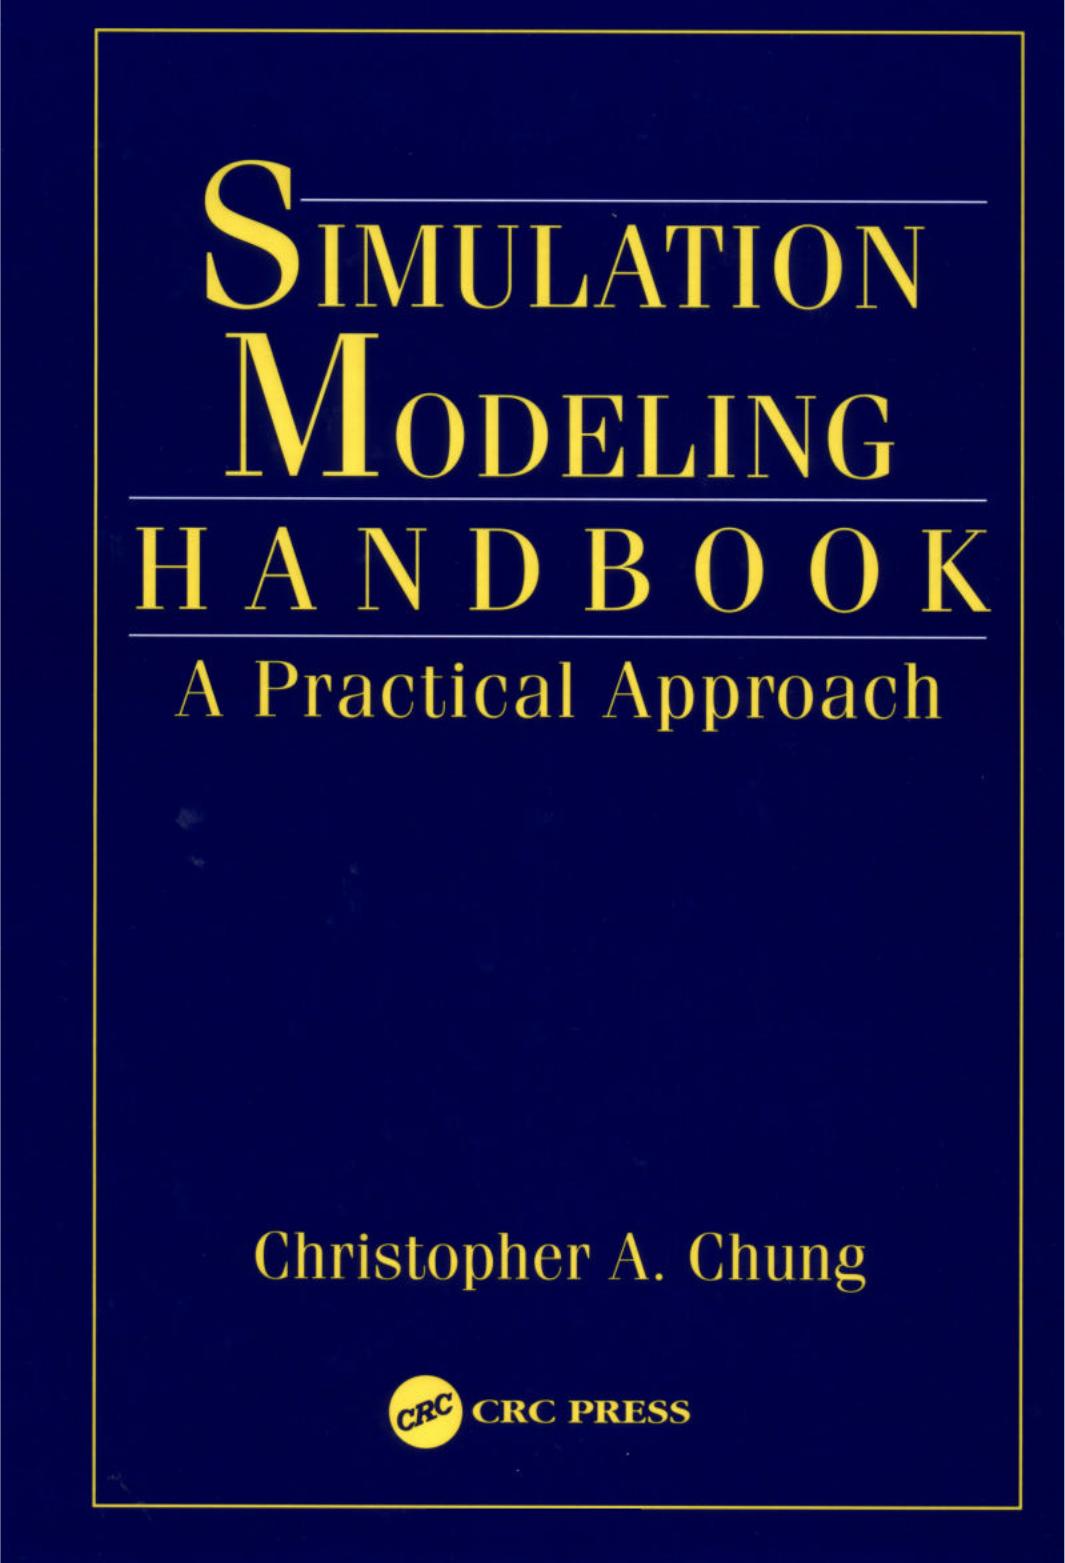 Simulation Modeling Handbook: A Practical Approach